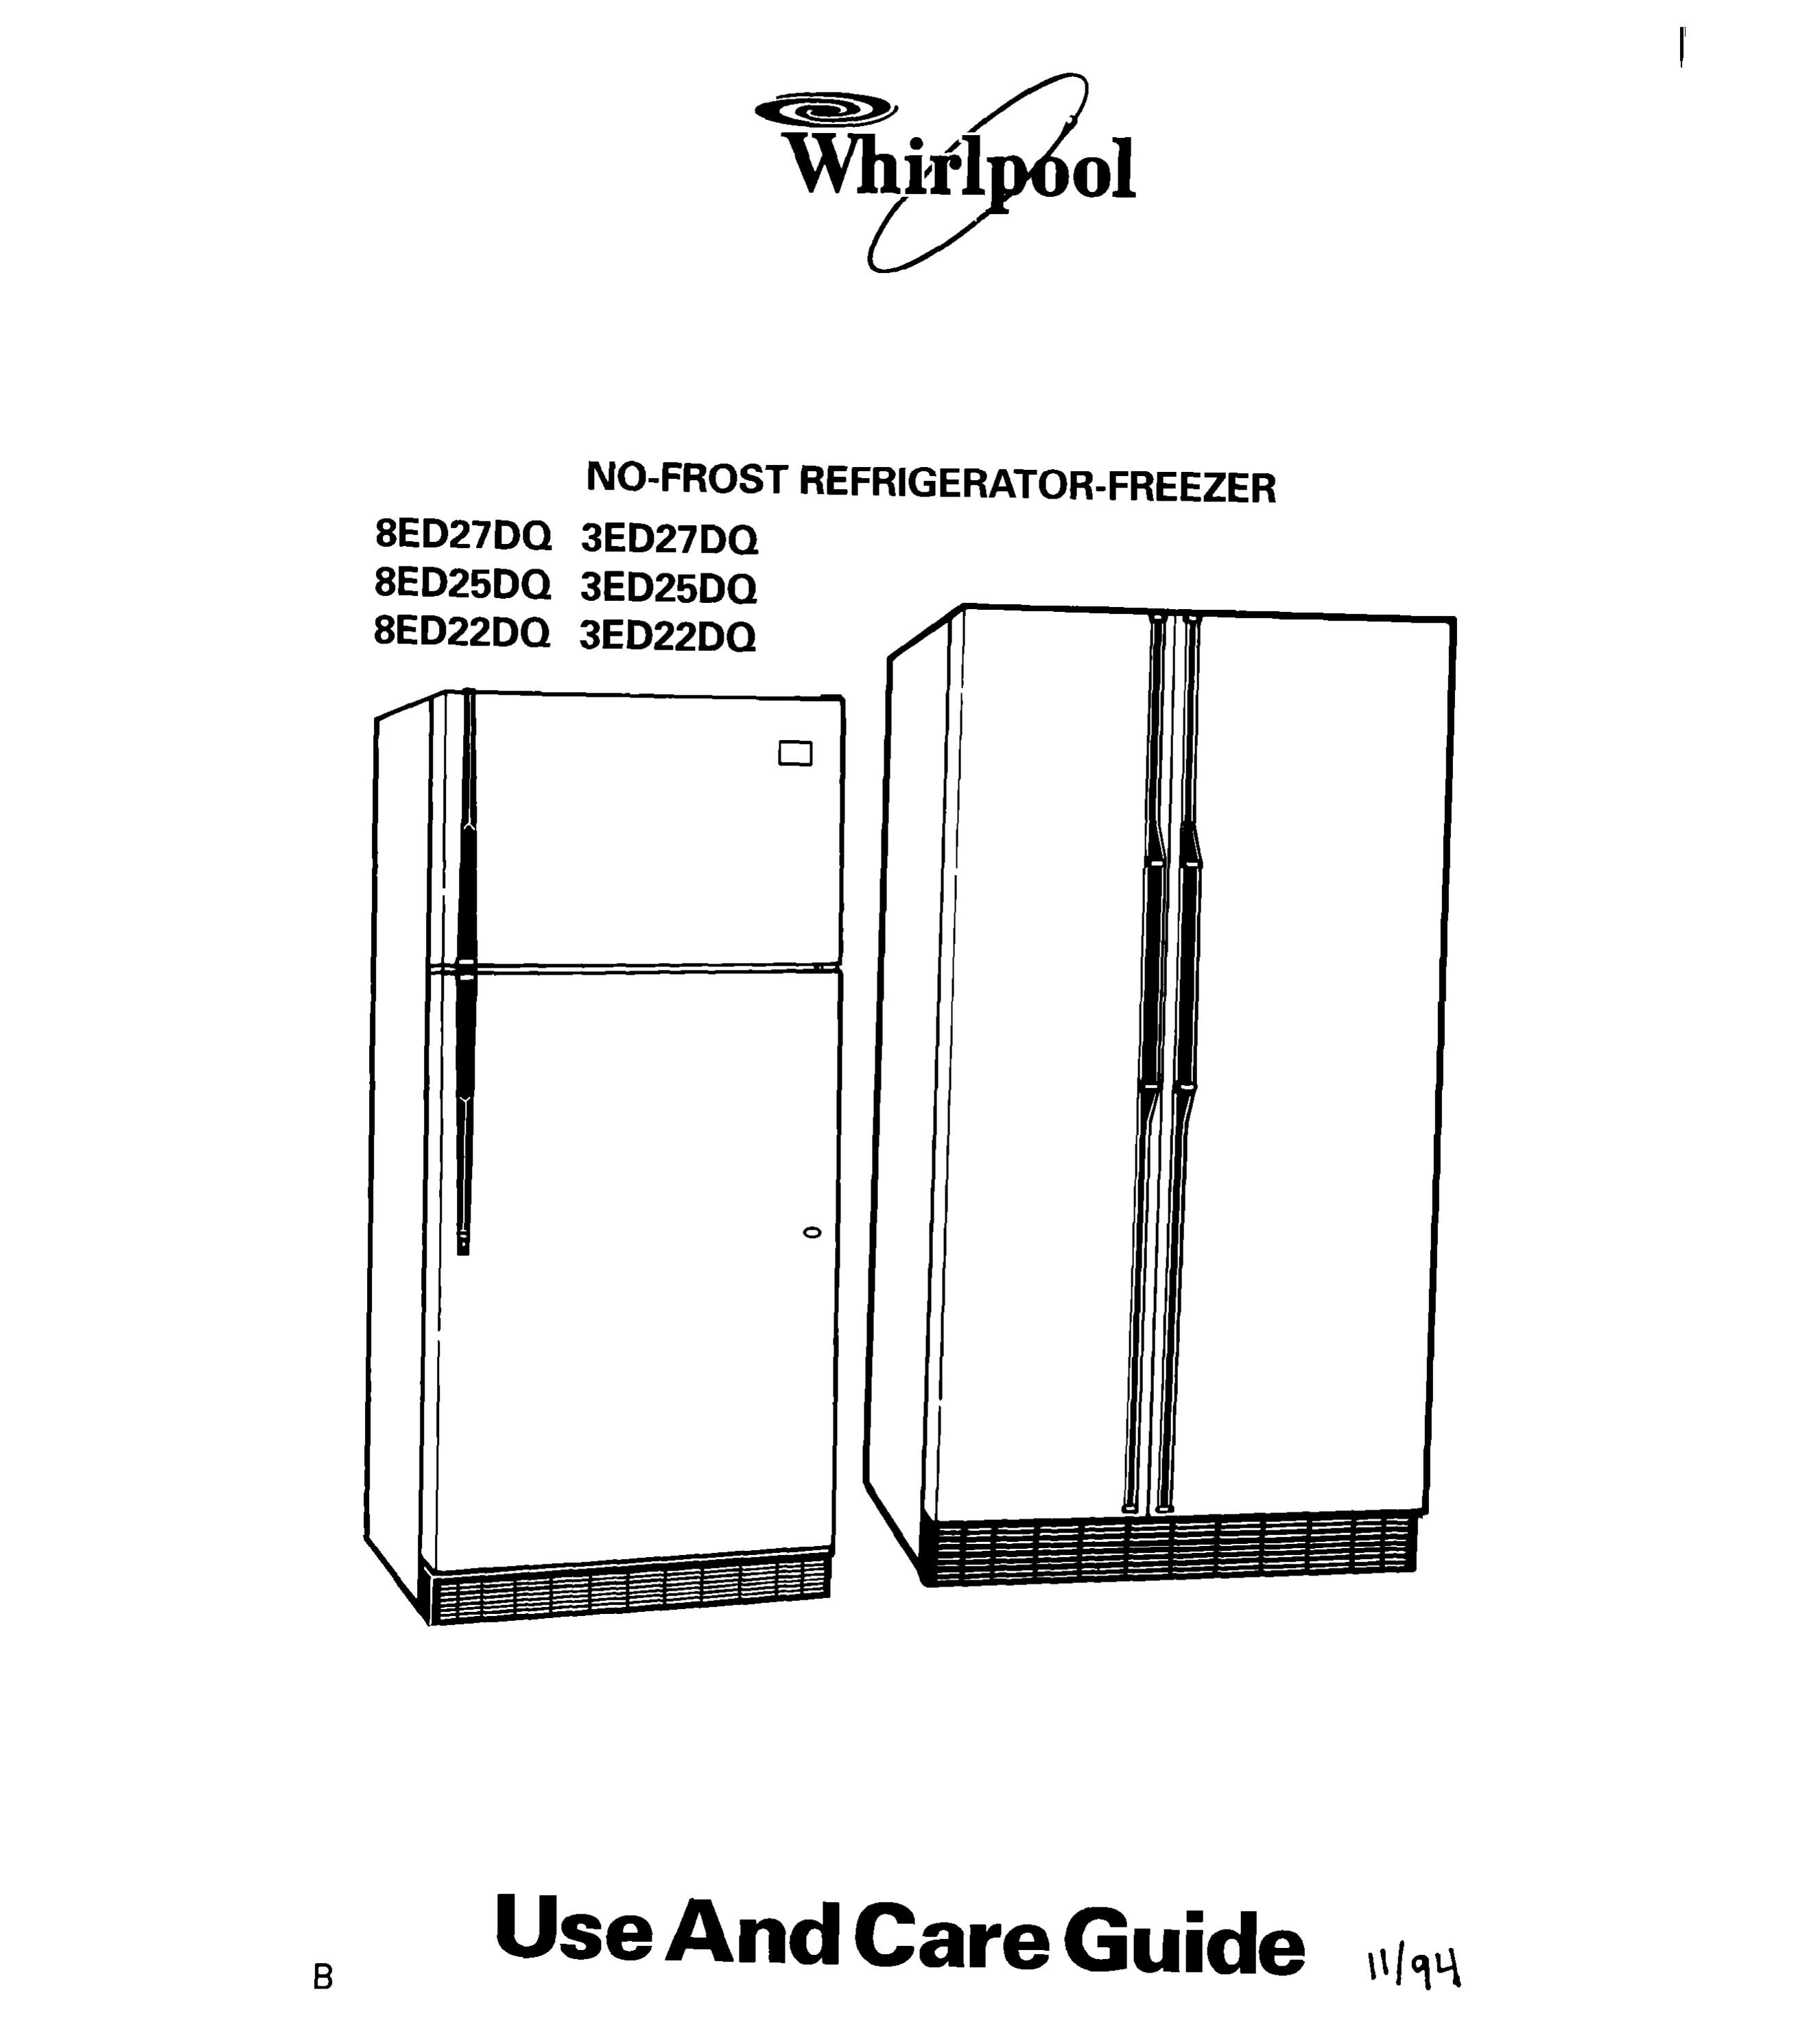 Whirlpool 3ED22DQ Refrigerator User Manual